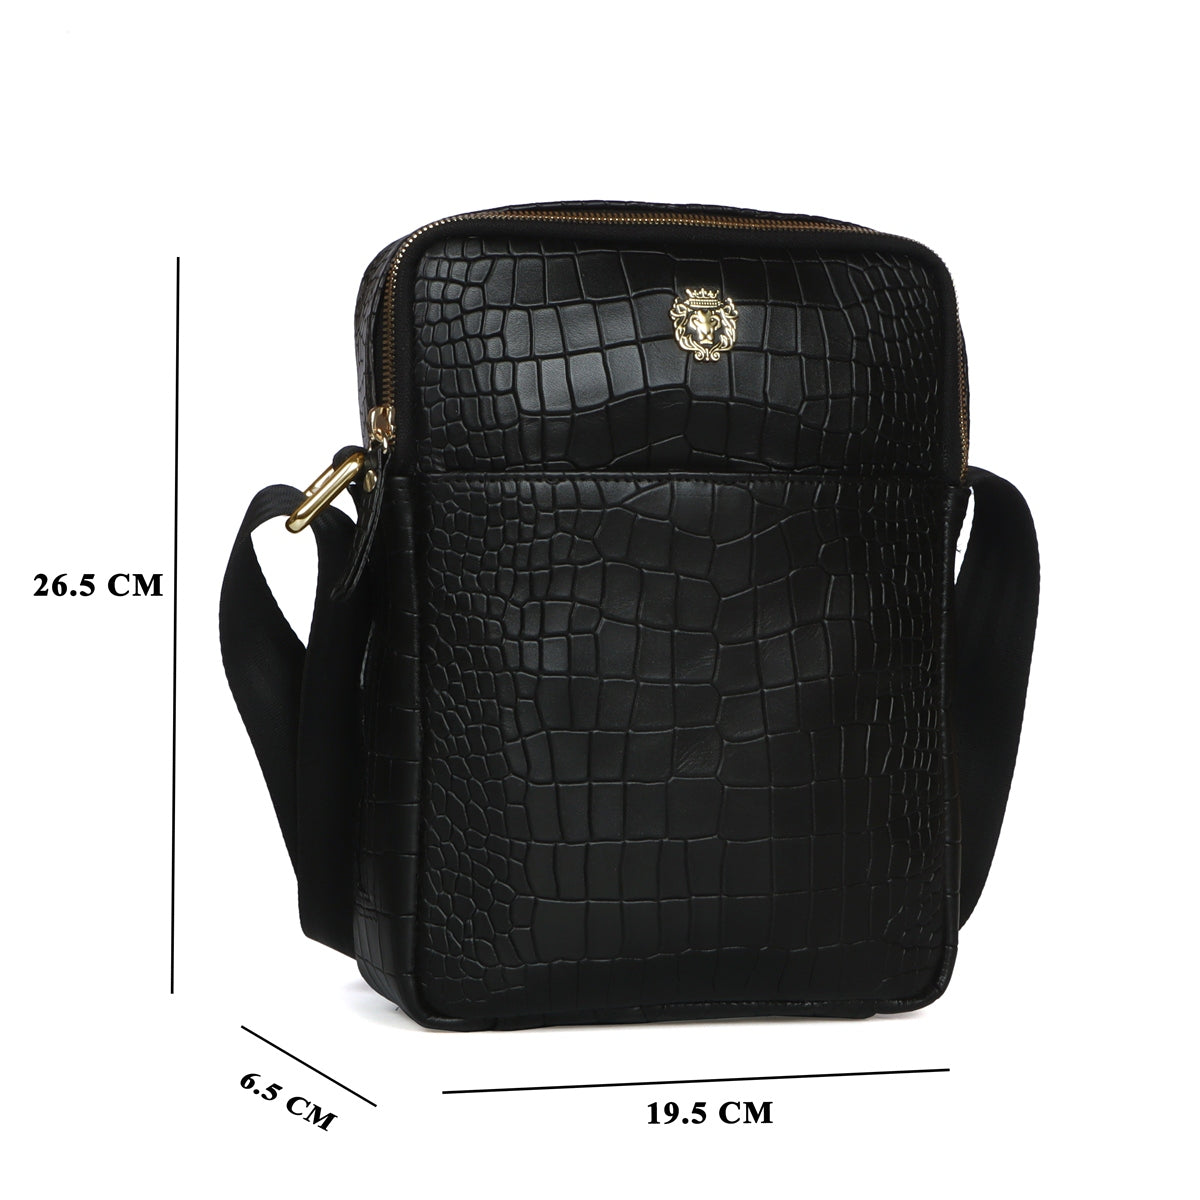 Unisex Smokey Dark Brown Croco Print Leather Multi-Pockets Cross-body Bag by Brune & Bareskin